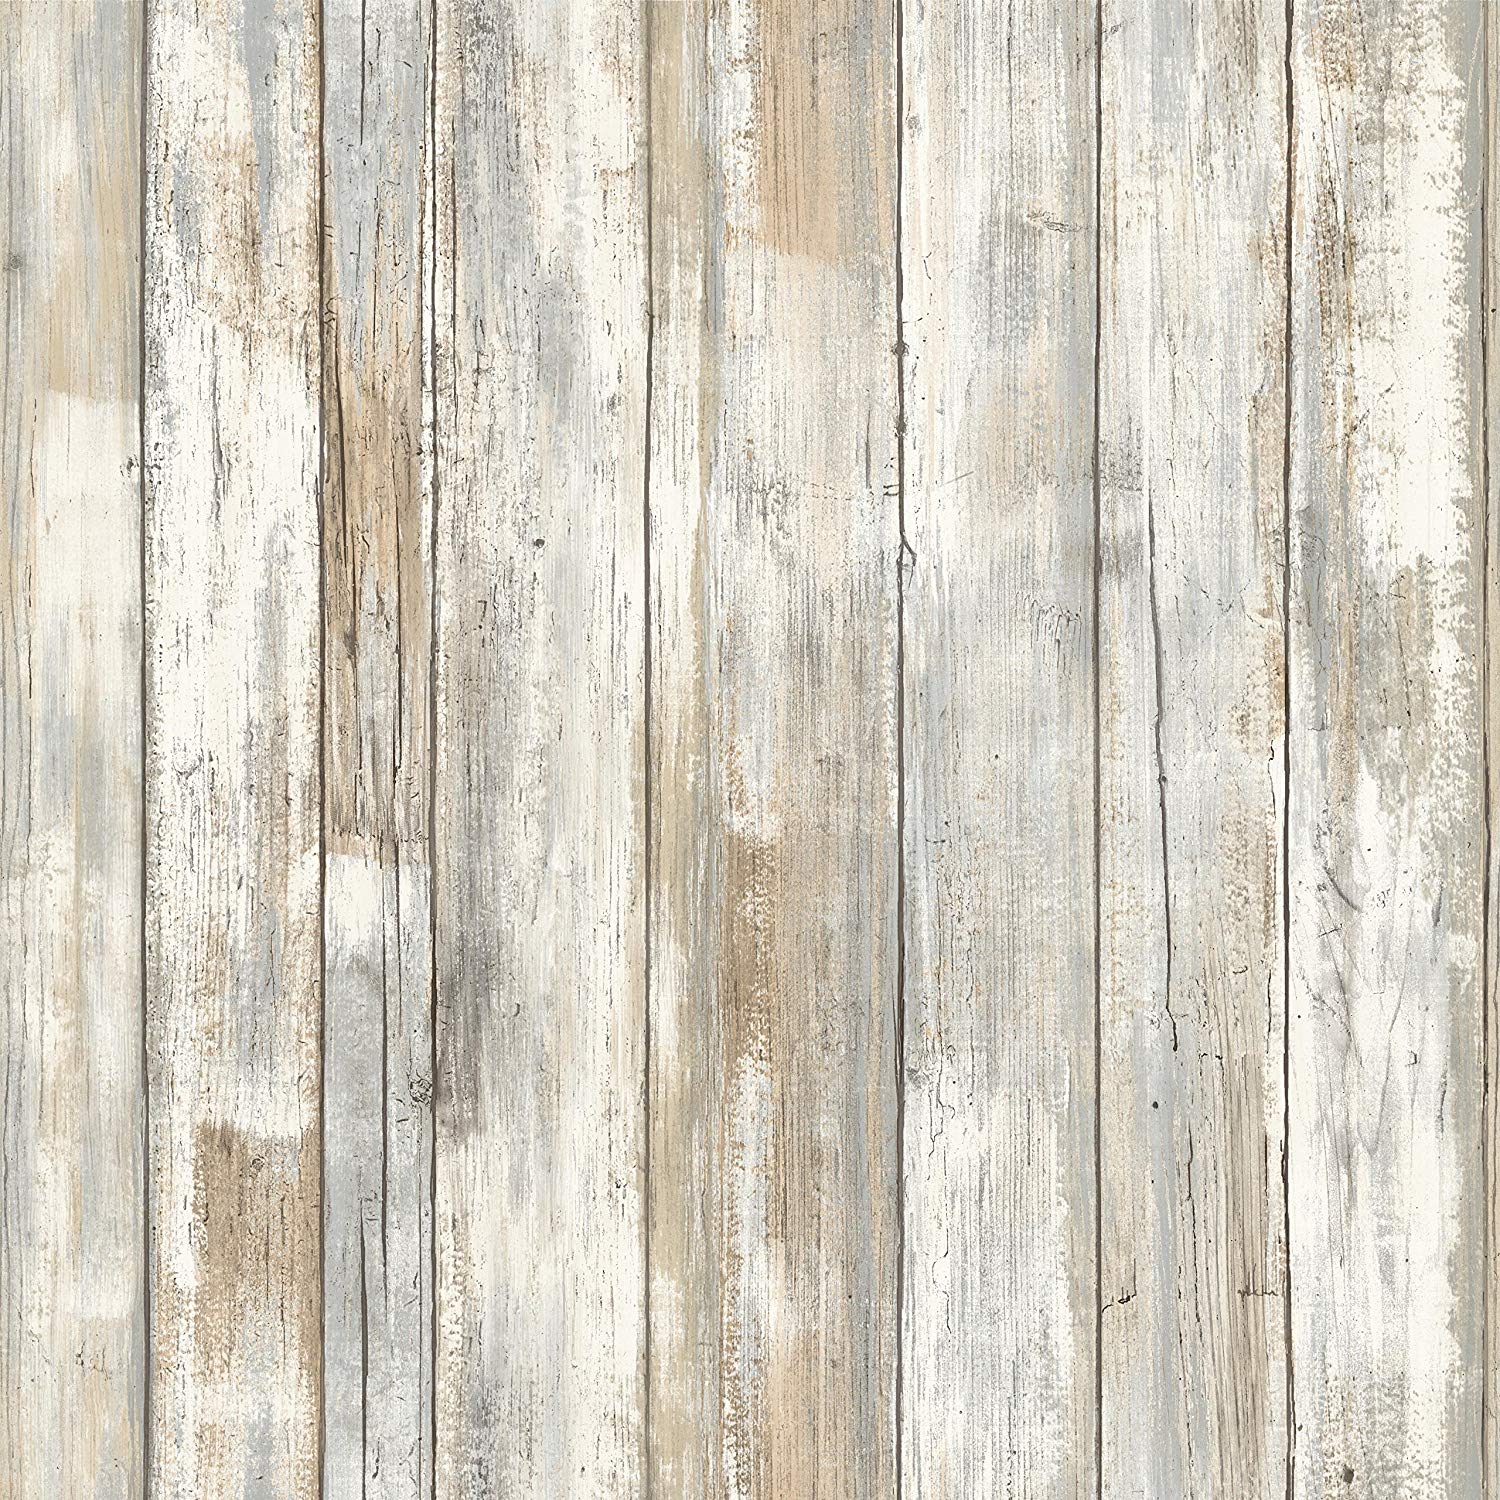  Planke Hintergrundbild 1500x1500. Wood Plank Wallpaper